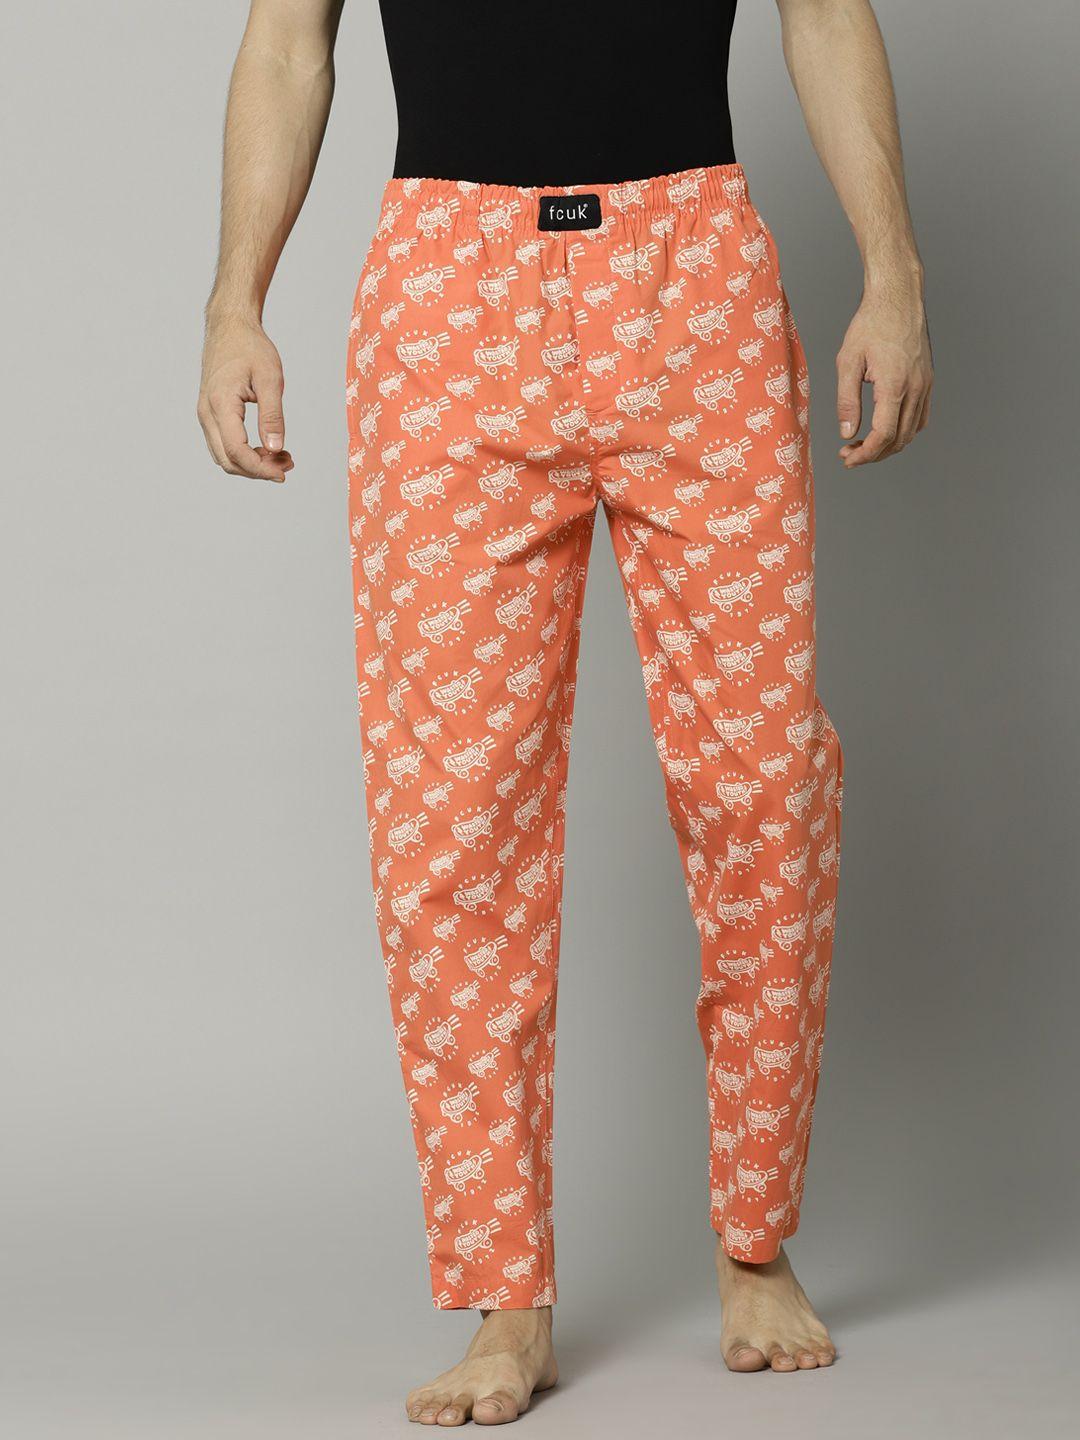 fcuk men peach printed pyjamas m4aaa